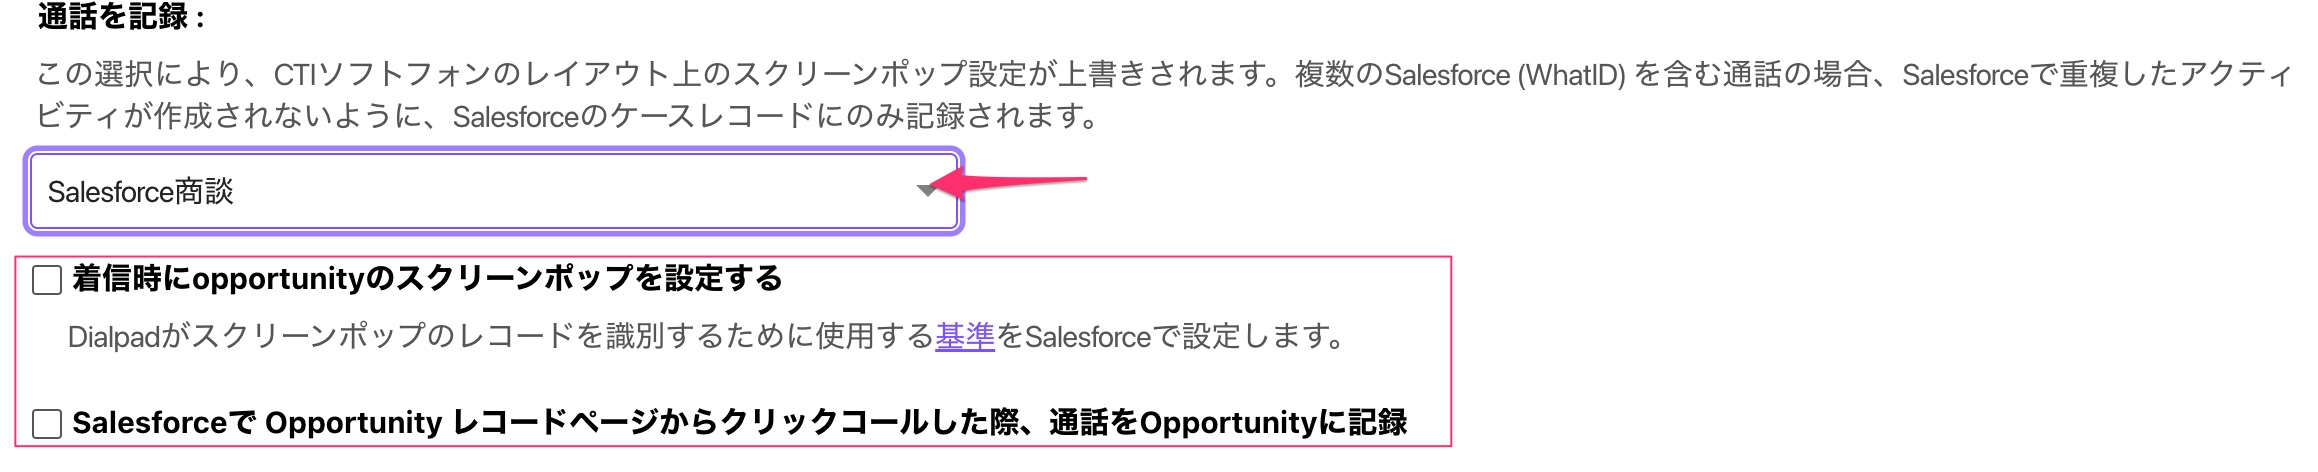 salesforce_log.jpg